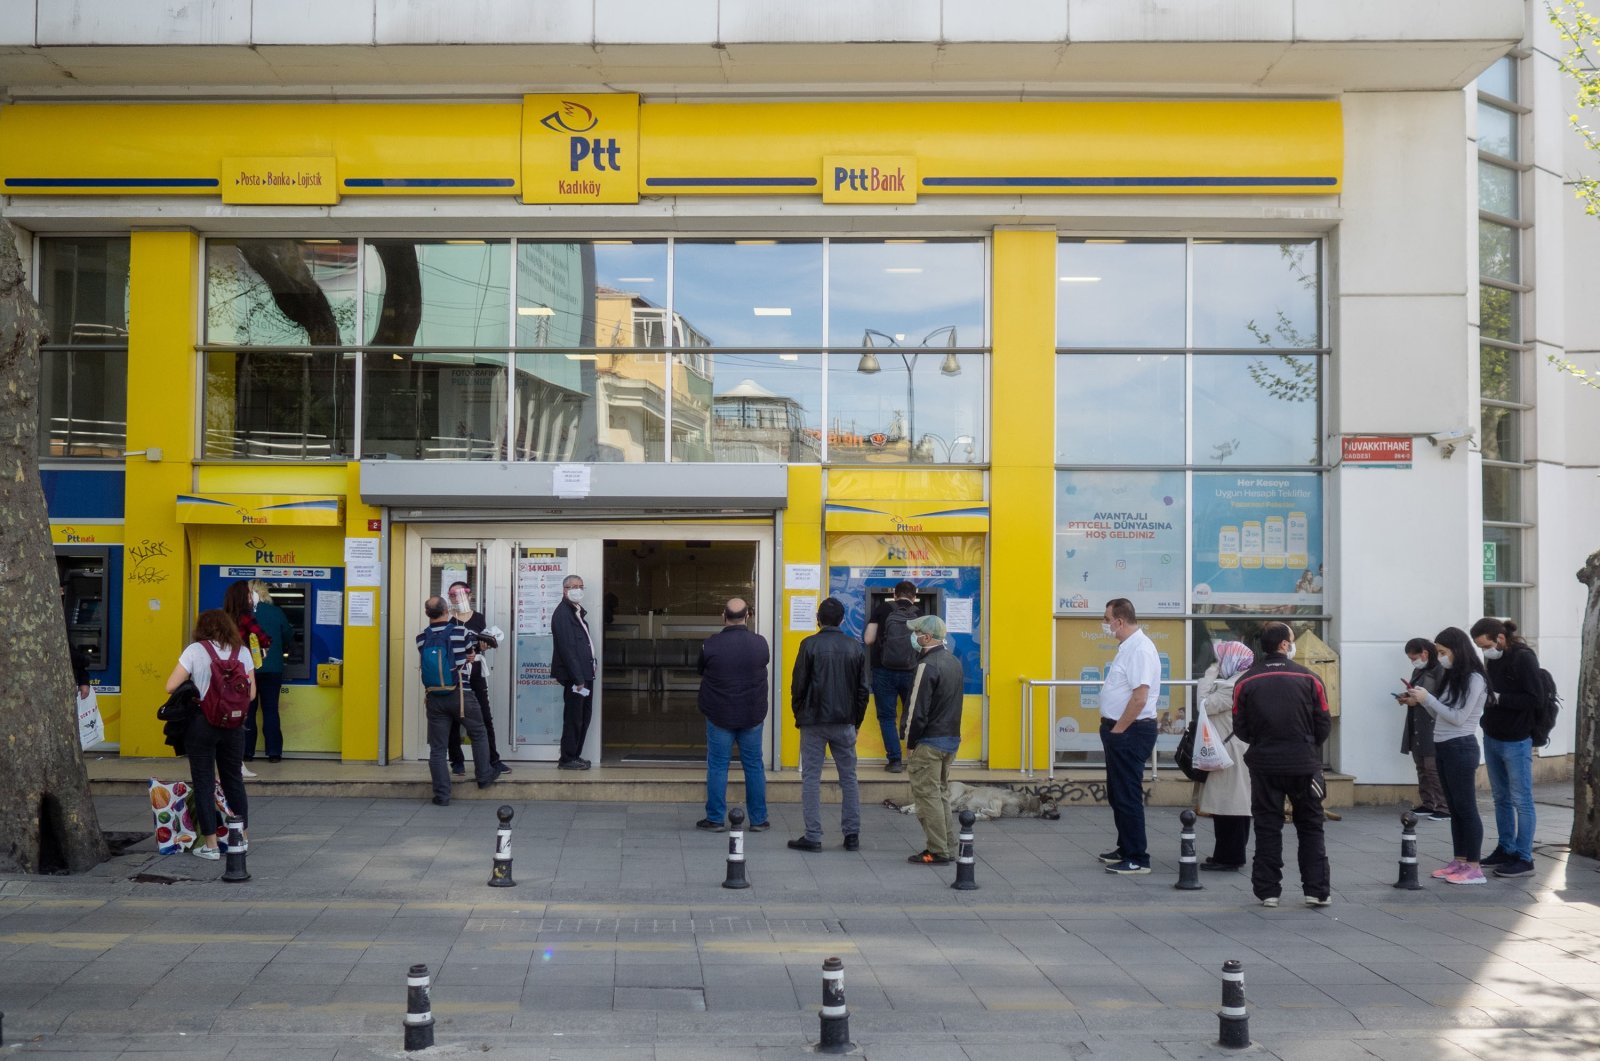 People wait in line at a PTT office, Kadıköy, Istanbul, Turkey, April 30, 2020. (Photo by Shutterstock)